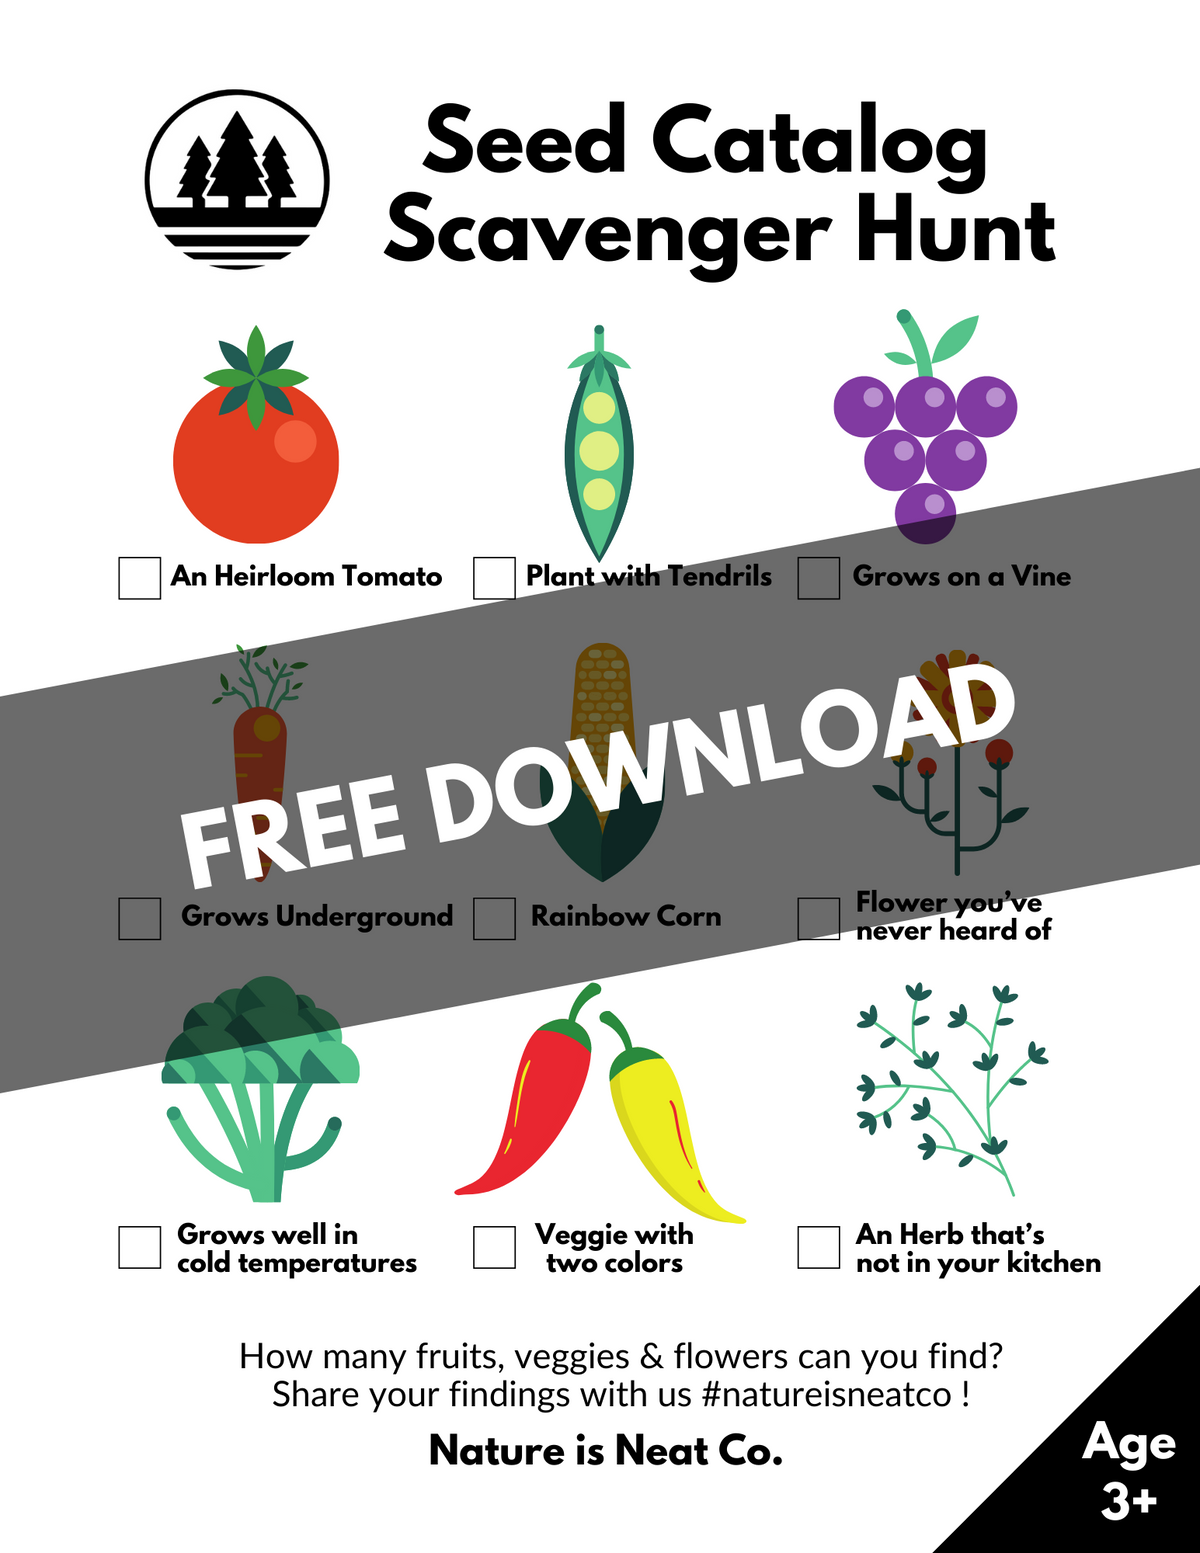 FREE: Seed Catalog Scavenger Hunt